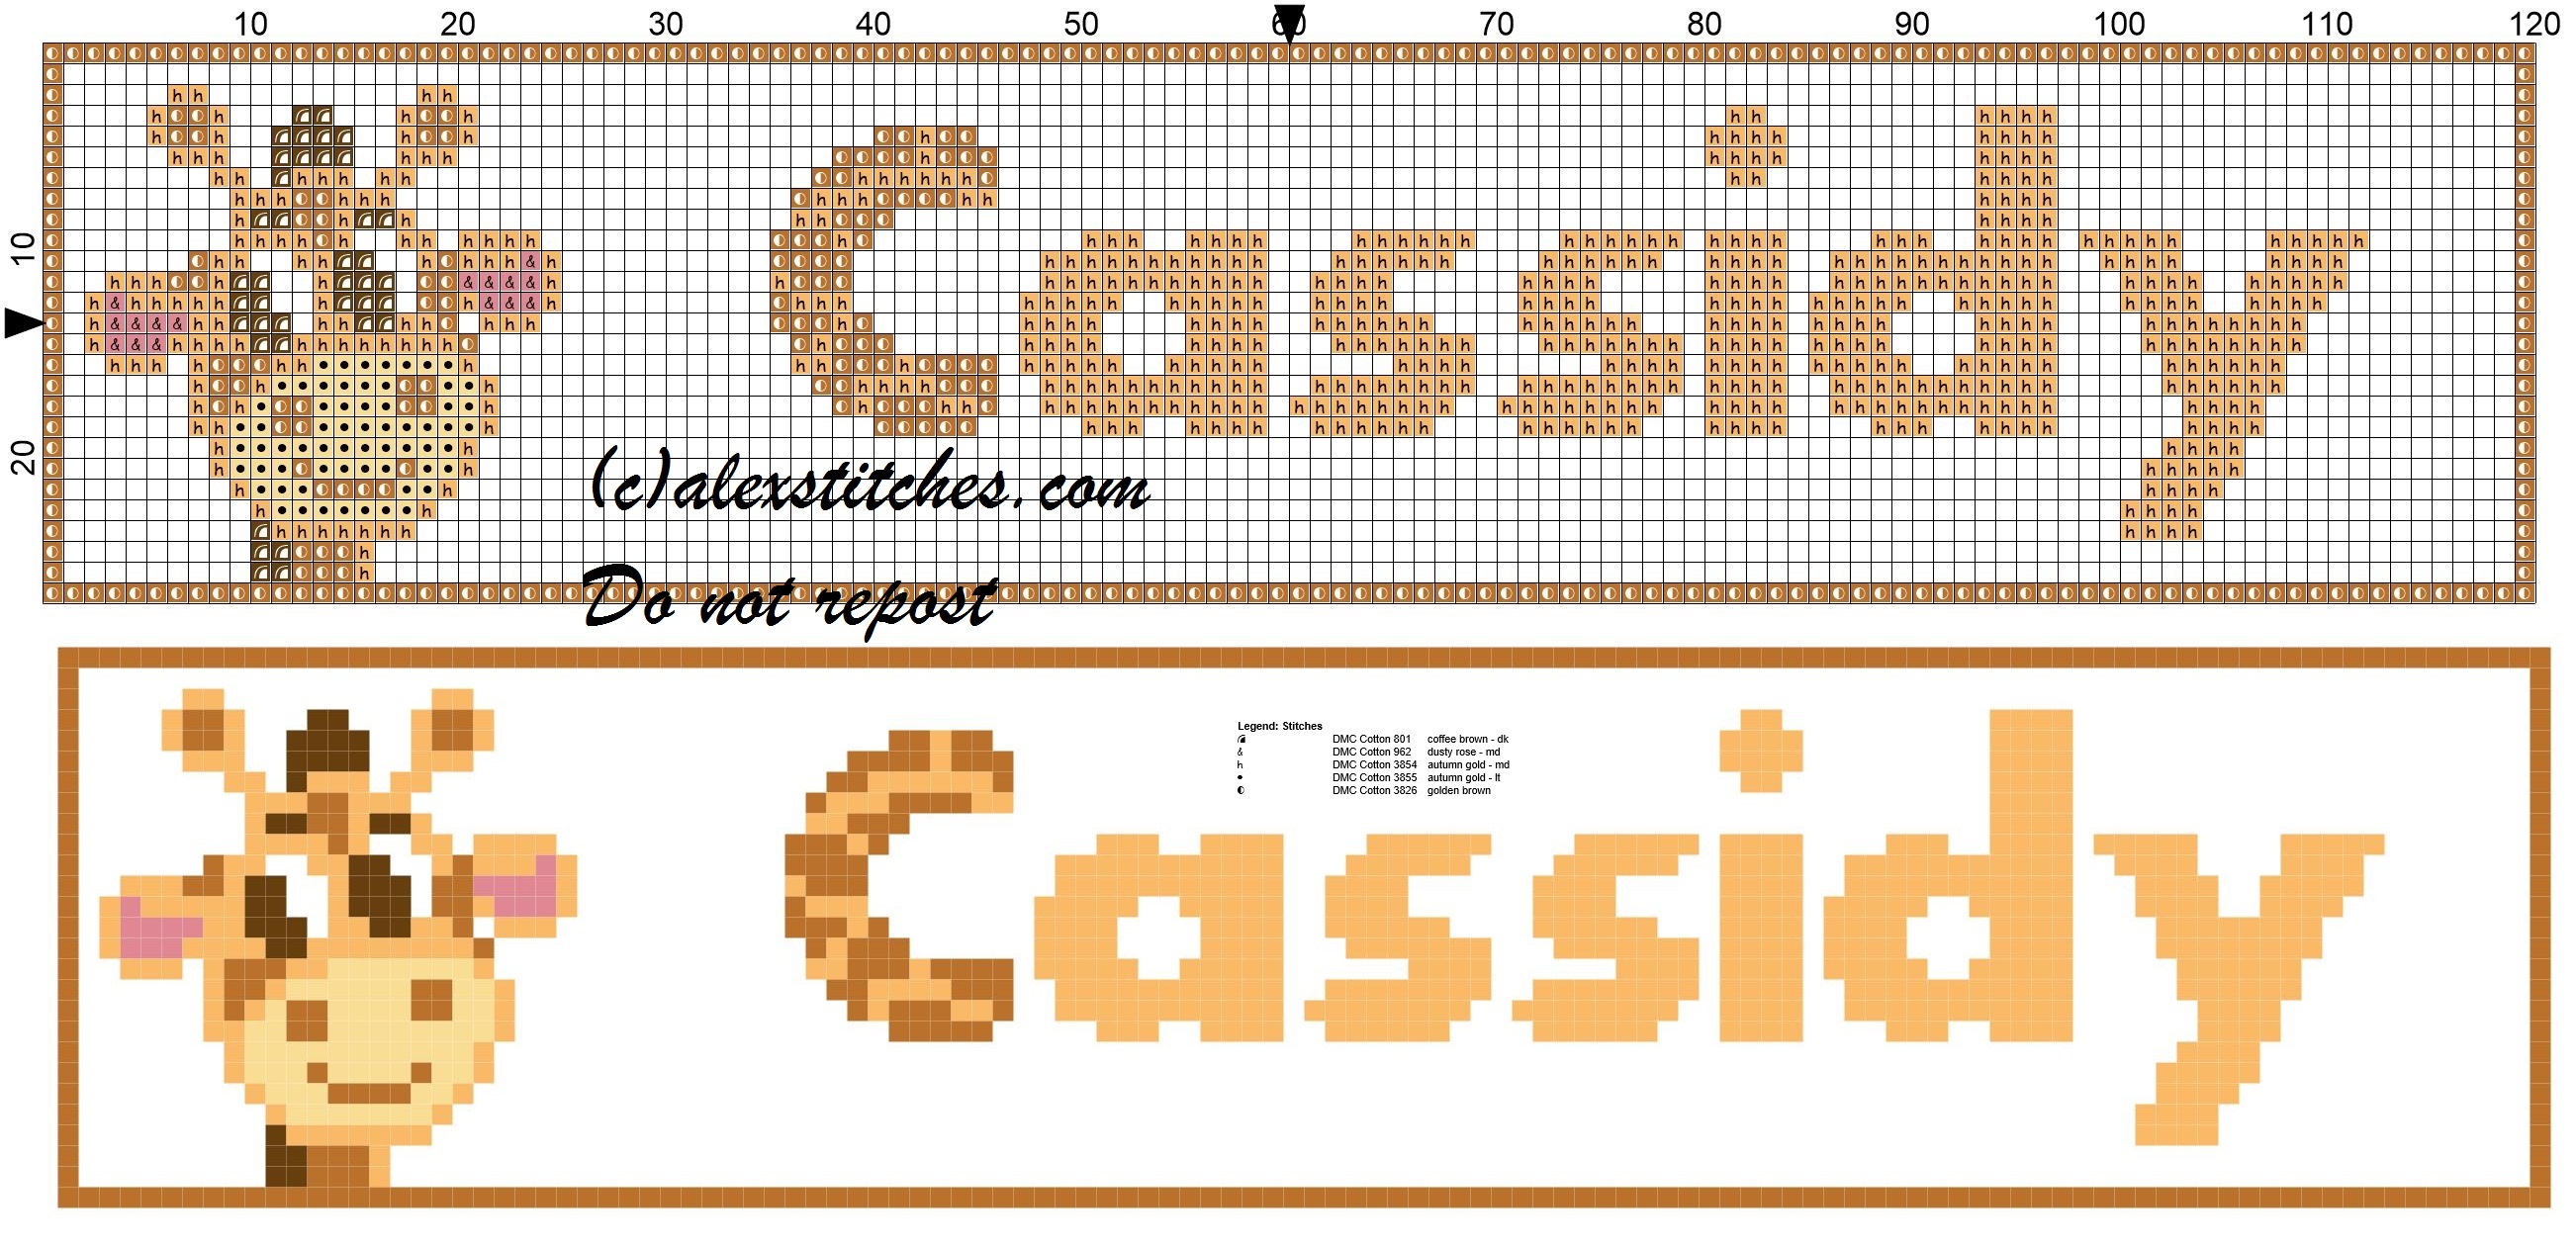 Cassidy name with giraffe cross stitch pattern